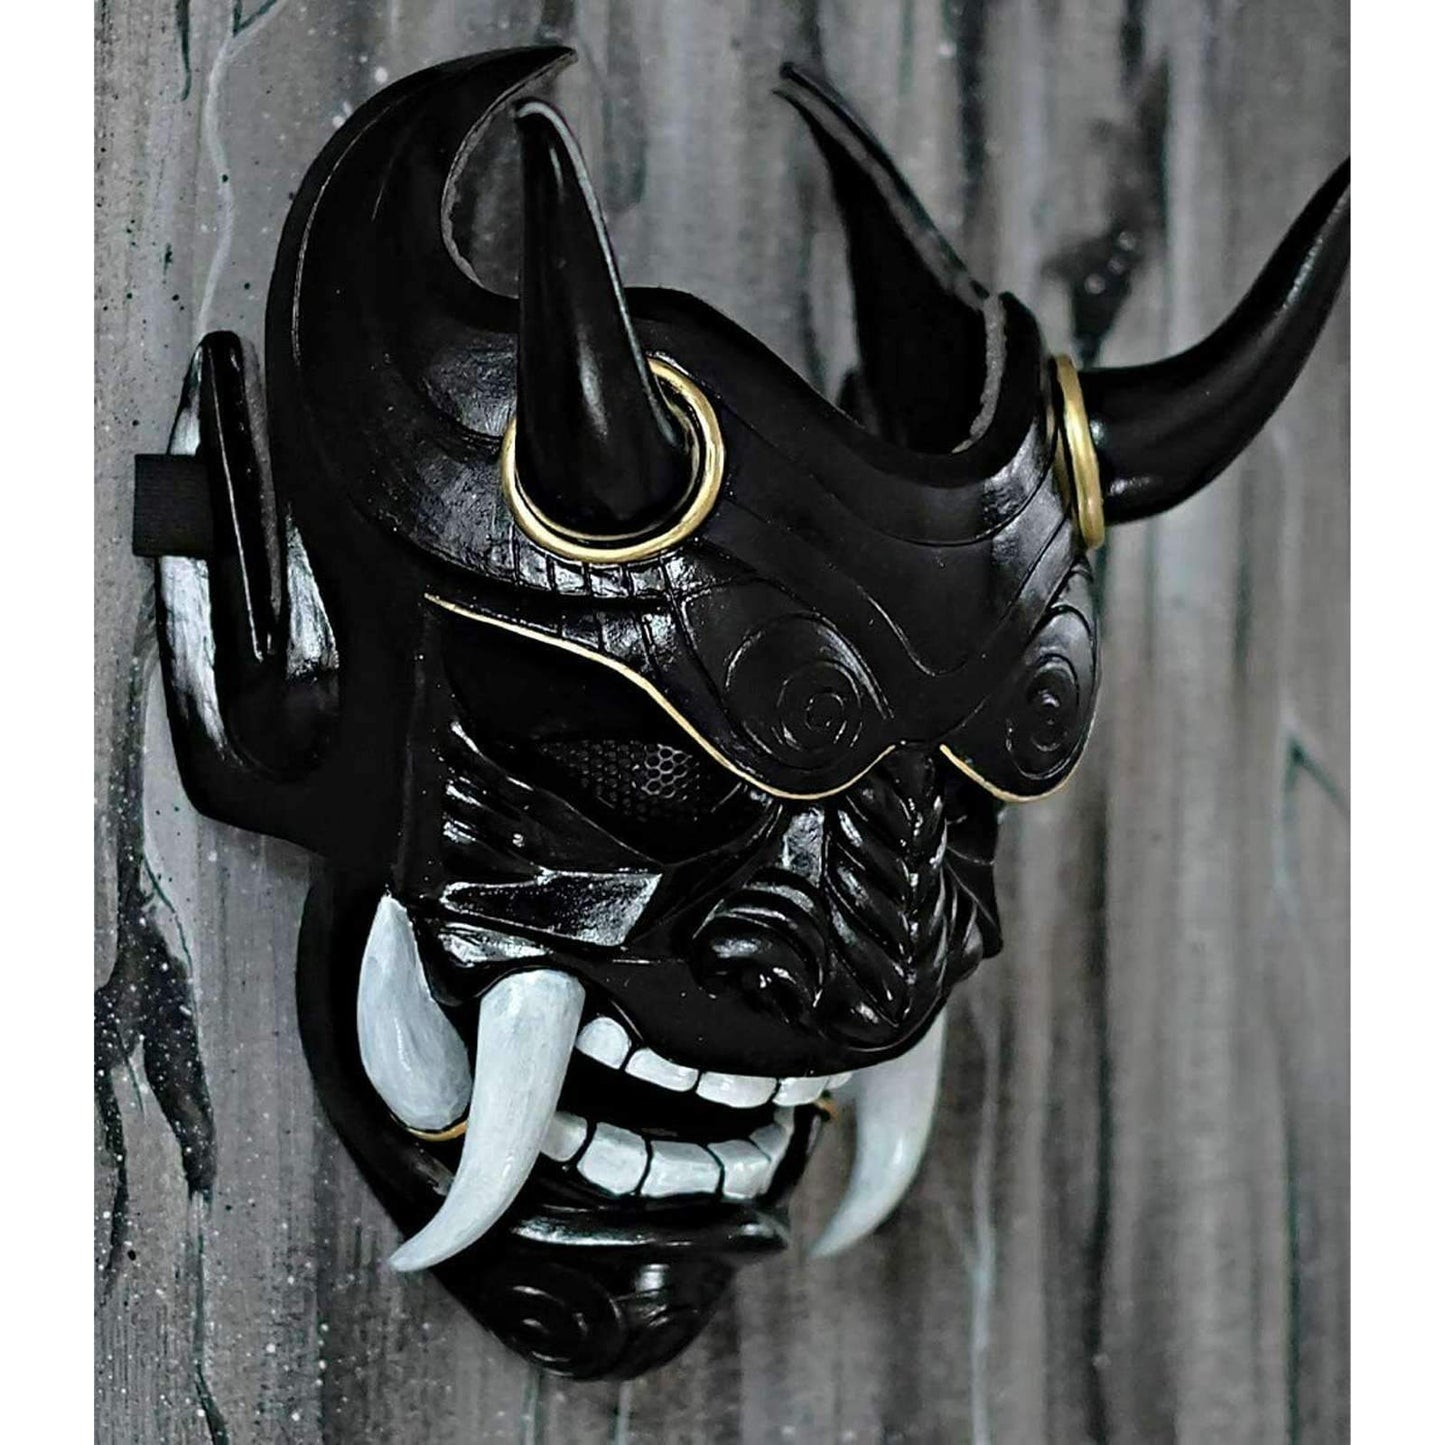 Black Oni Mask – Japanese Oni Masks